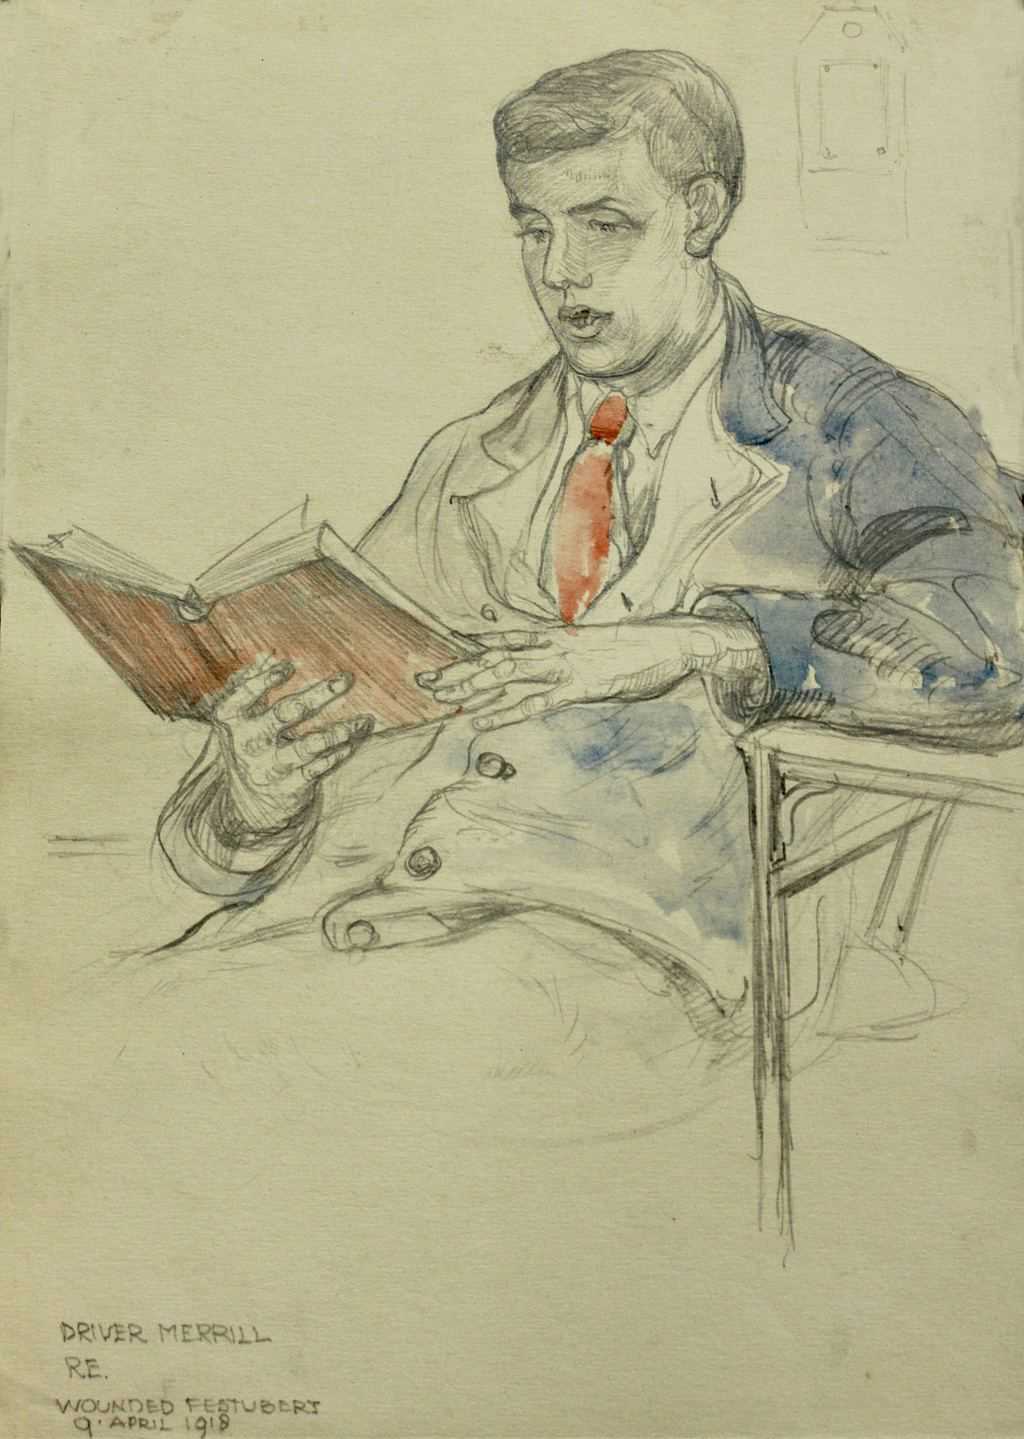 Sketch of Driver MERRILL RE / Wounded Festubert 9 April 1918